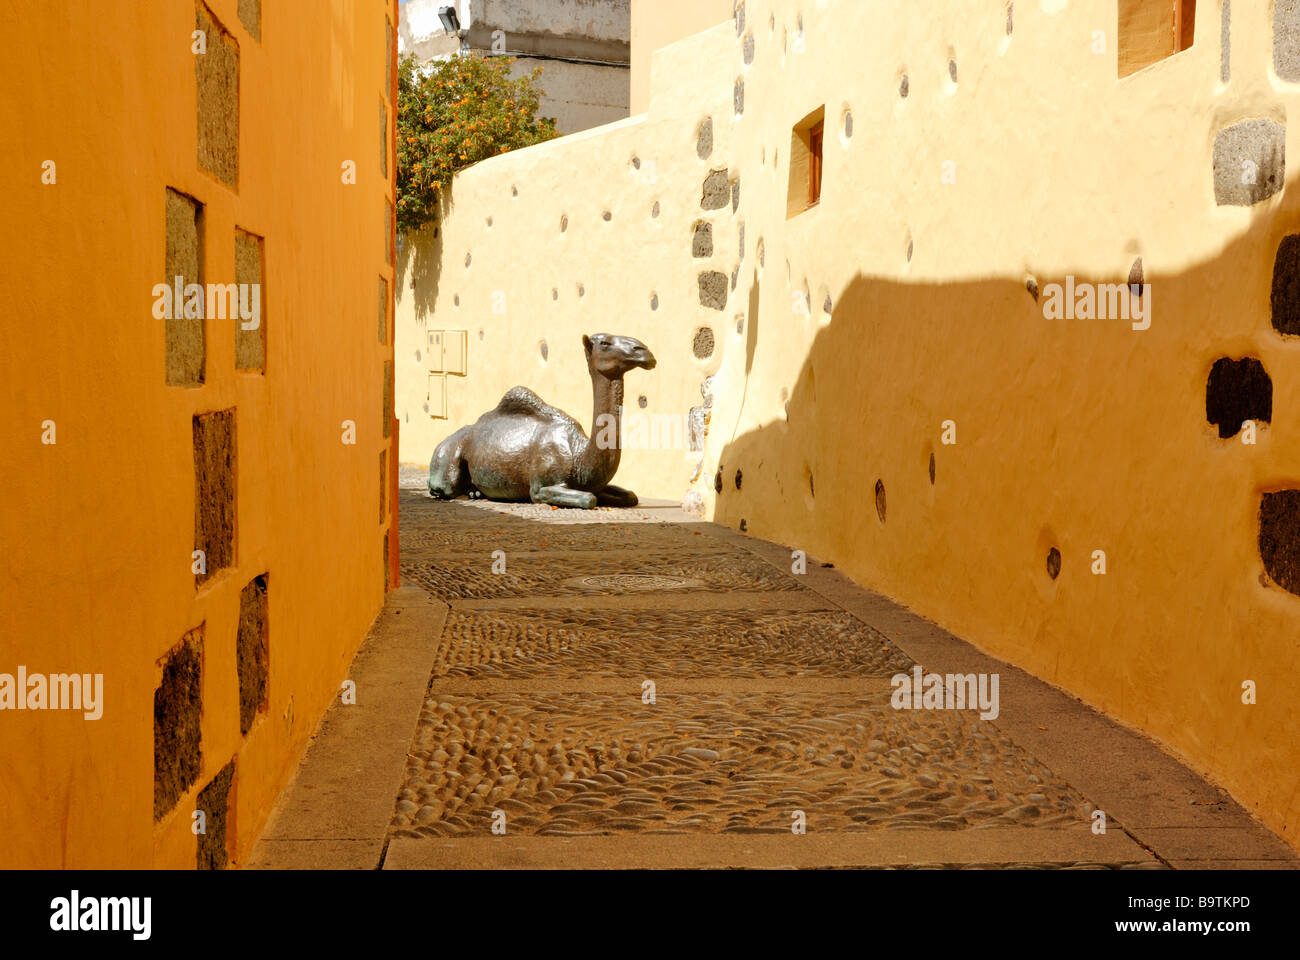 The bronze camel statue in the Retama alley. Aguimes, Gran Canaria, Canary Islands, Spain, Europe. Stock Photo